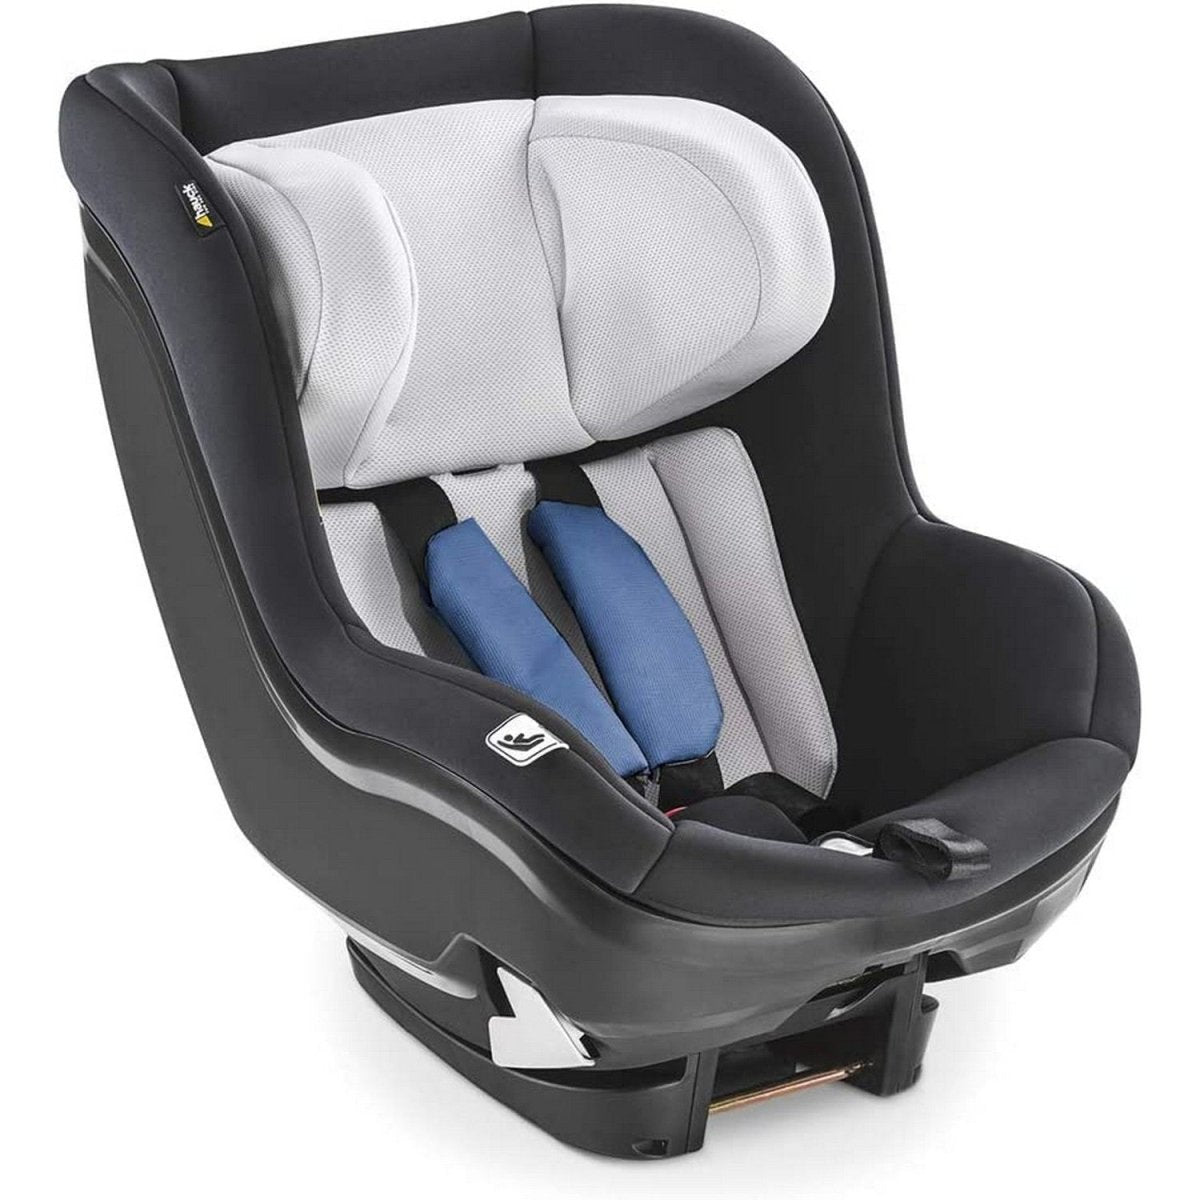 Hauck Ipro Kids Convertible Car Seat For Baby & Kids- Denim - 614174